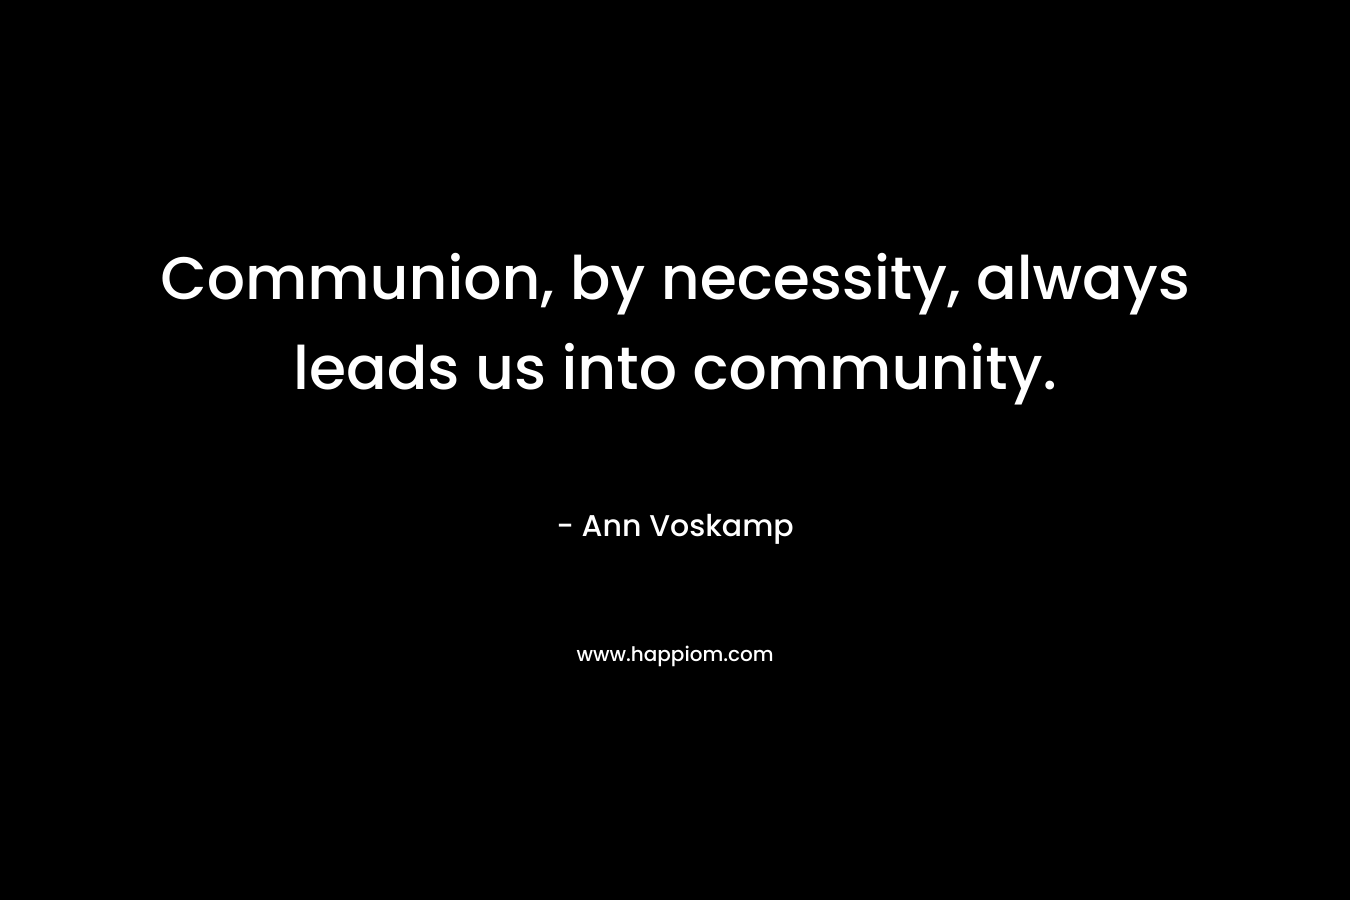 Communion, by necessity, always leads us into community. – Ann Voskamp